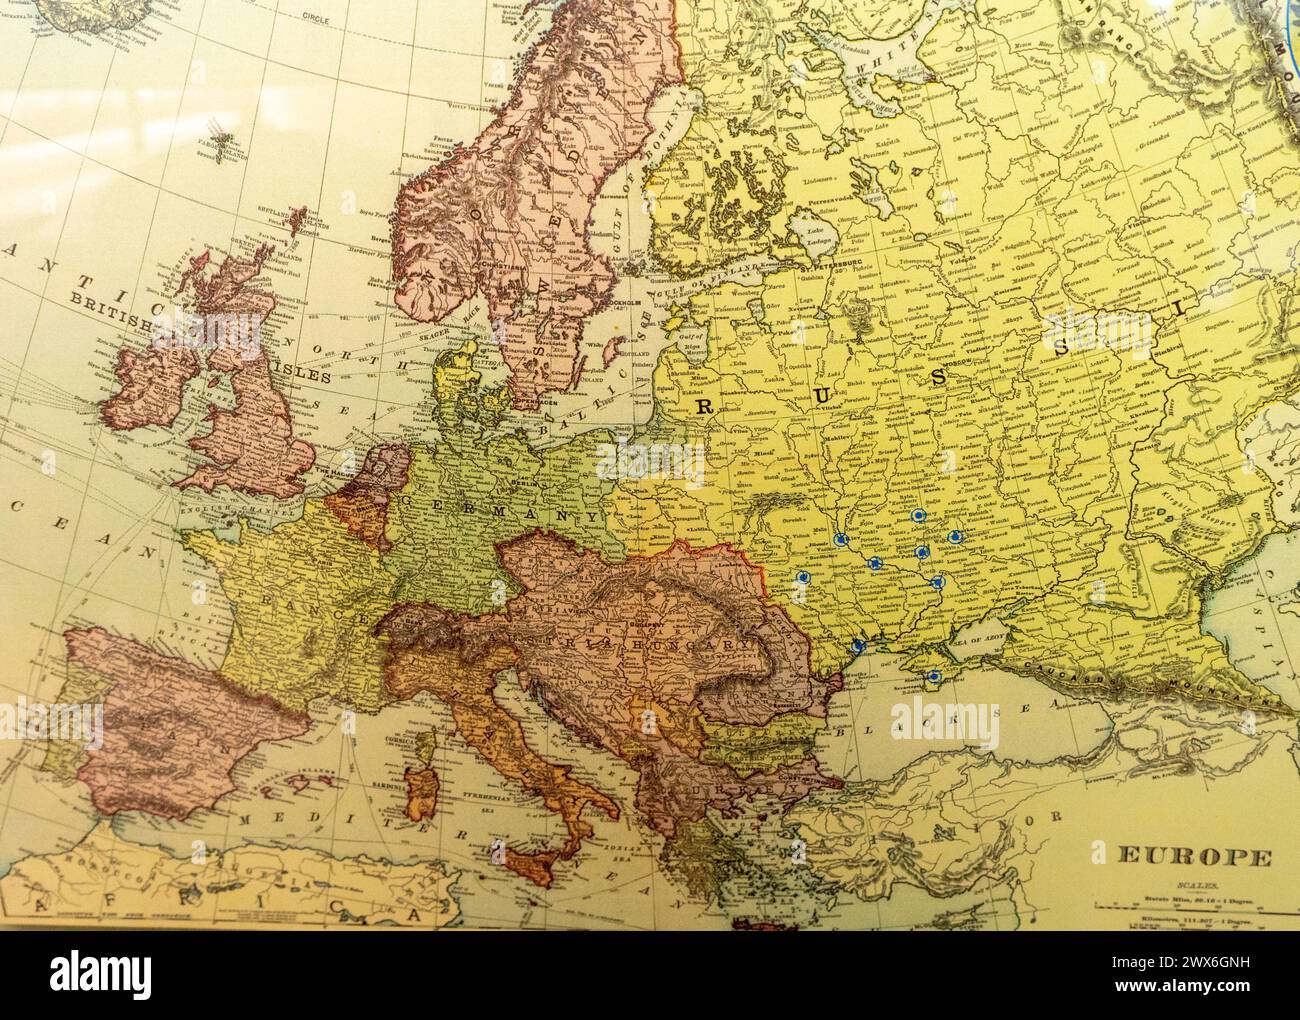 Antique world map, Europe - circa 1900 Stock Photo